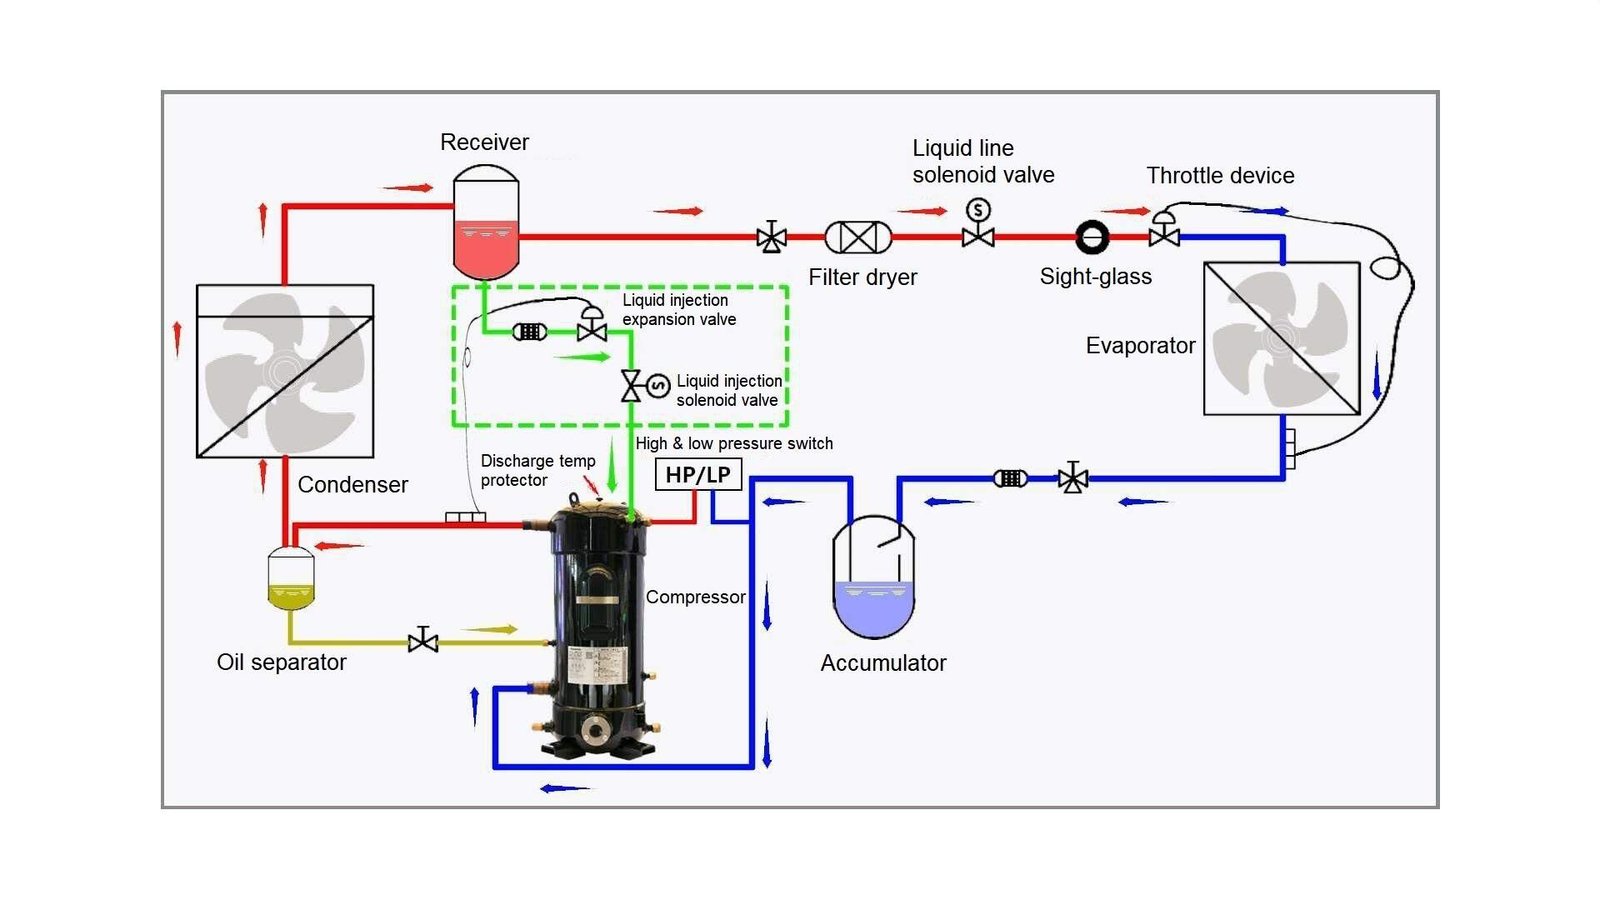 LBP condensing unit refrigeration system diagram